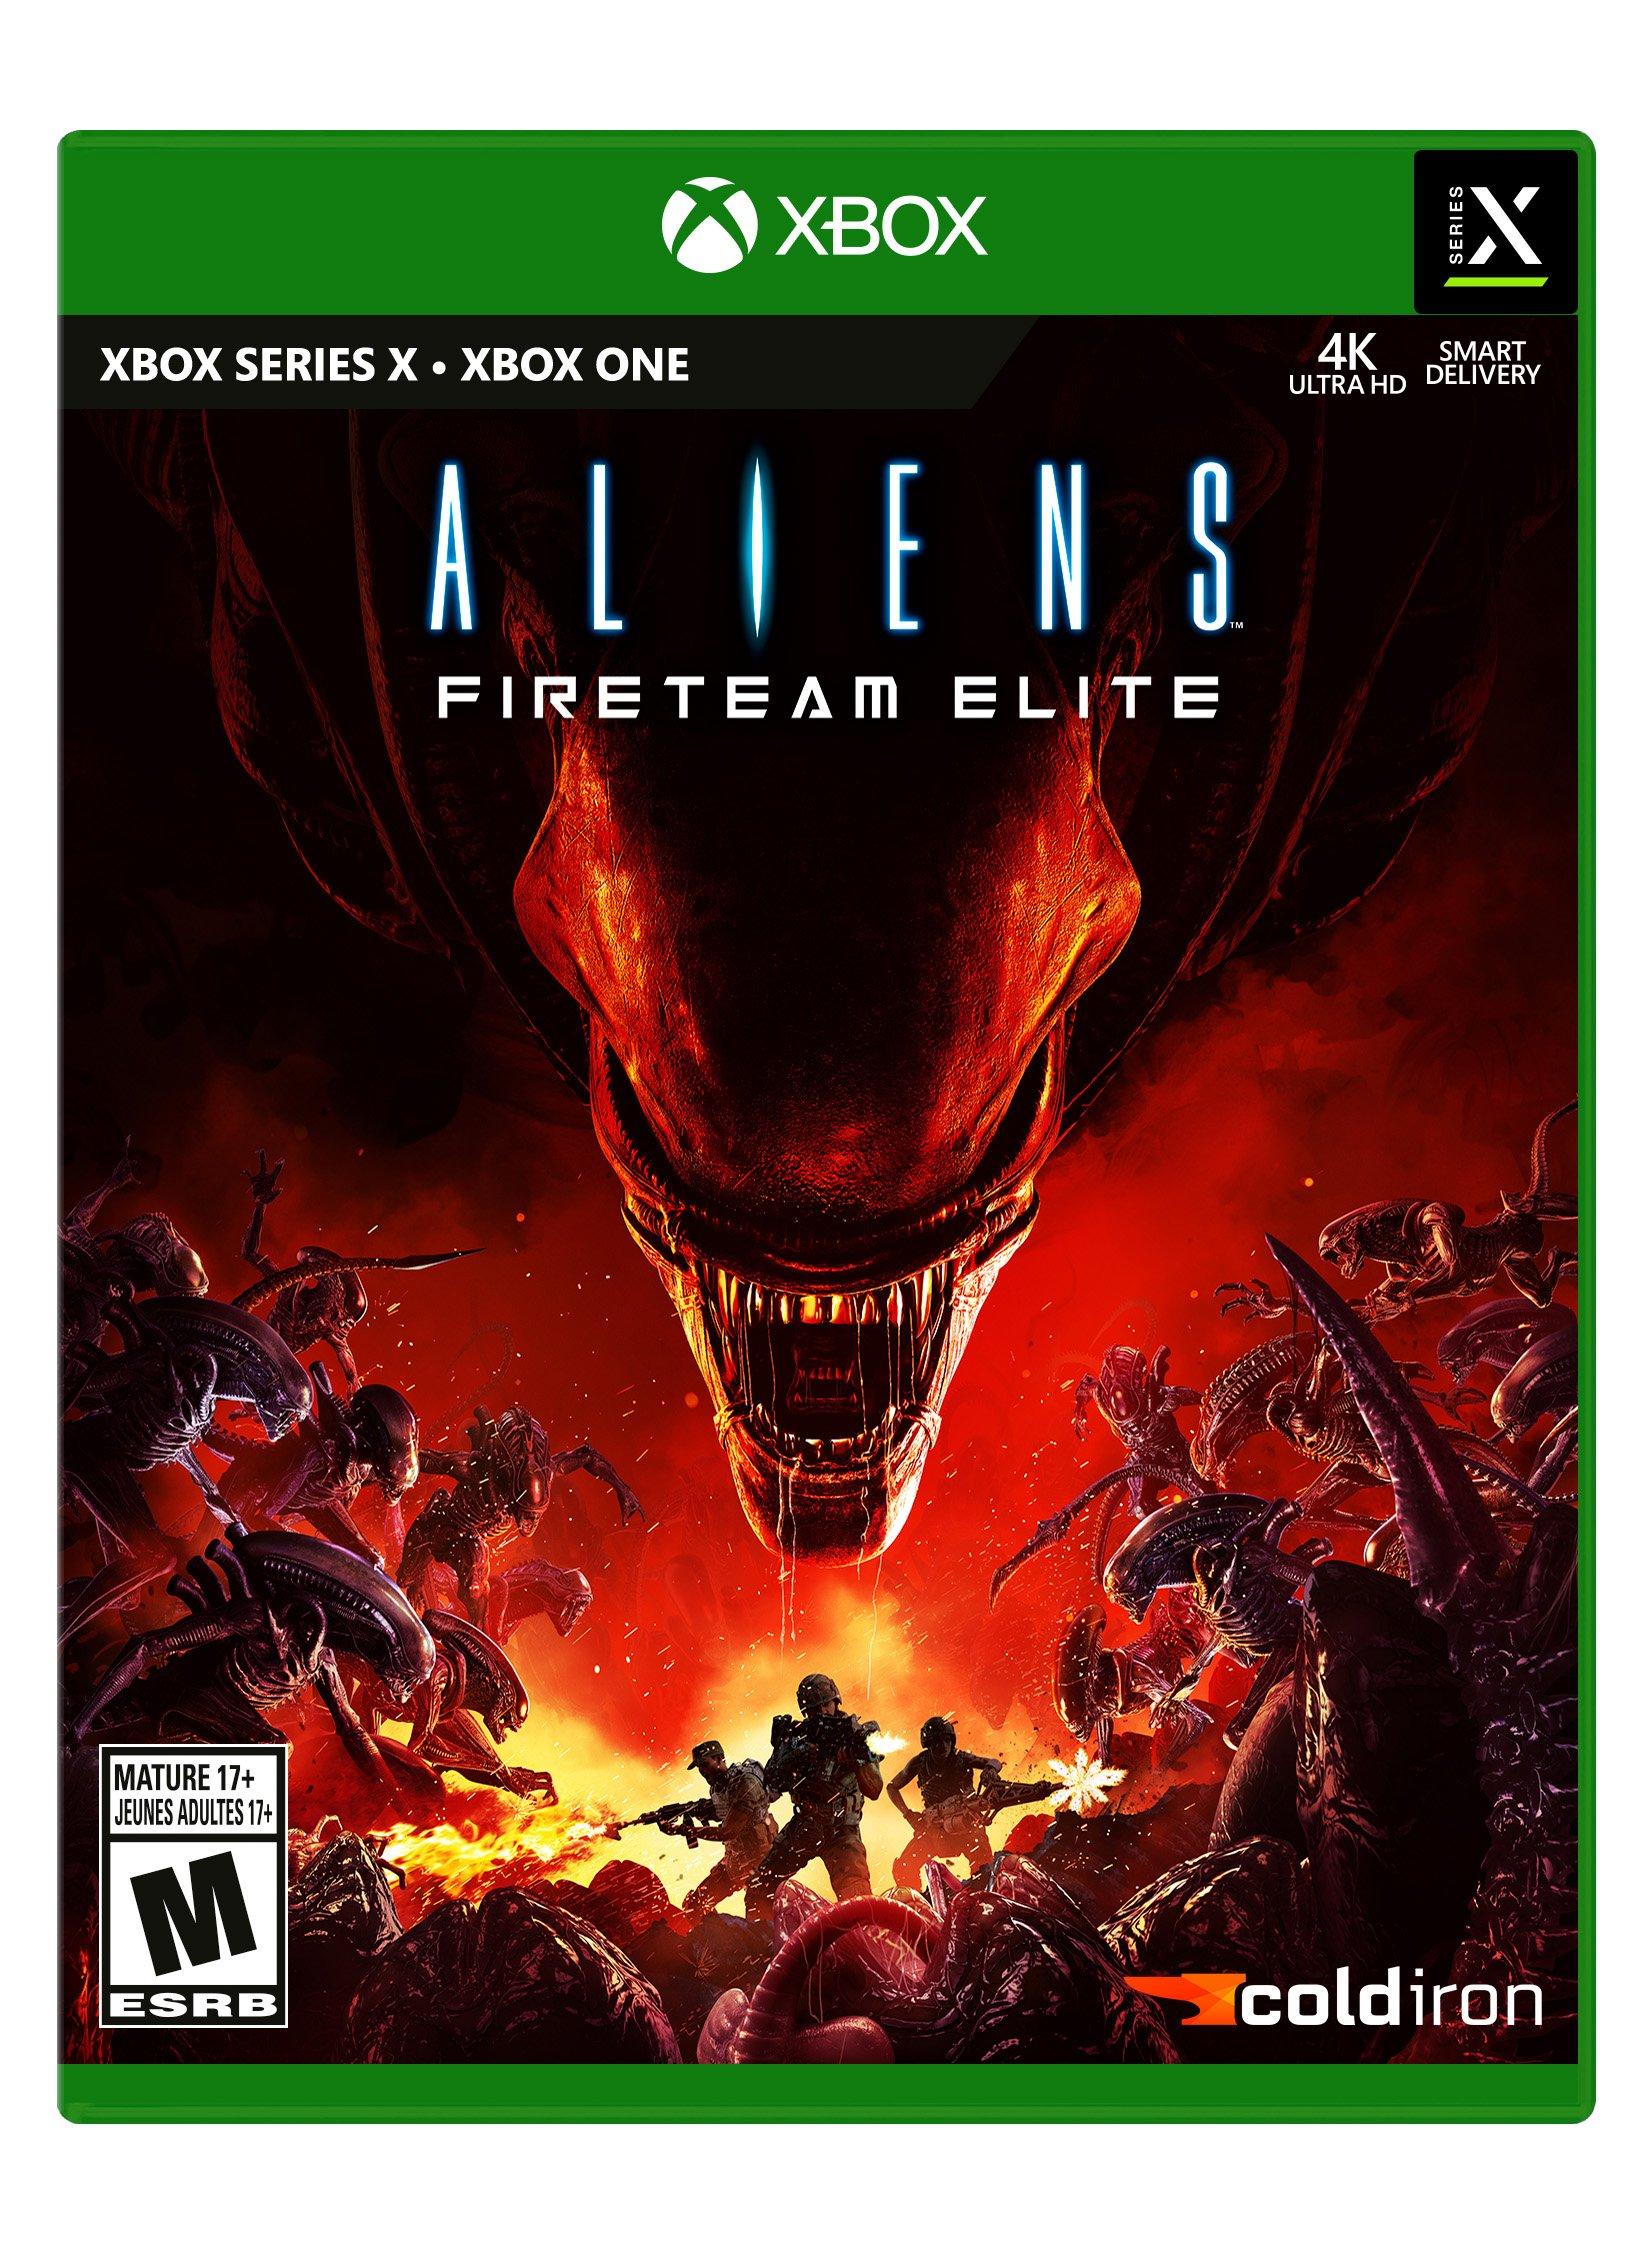 Buy cheap Aliens vs. Predator Xbox 360 key - lowest price